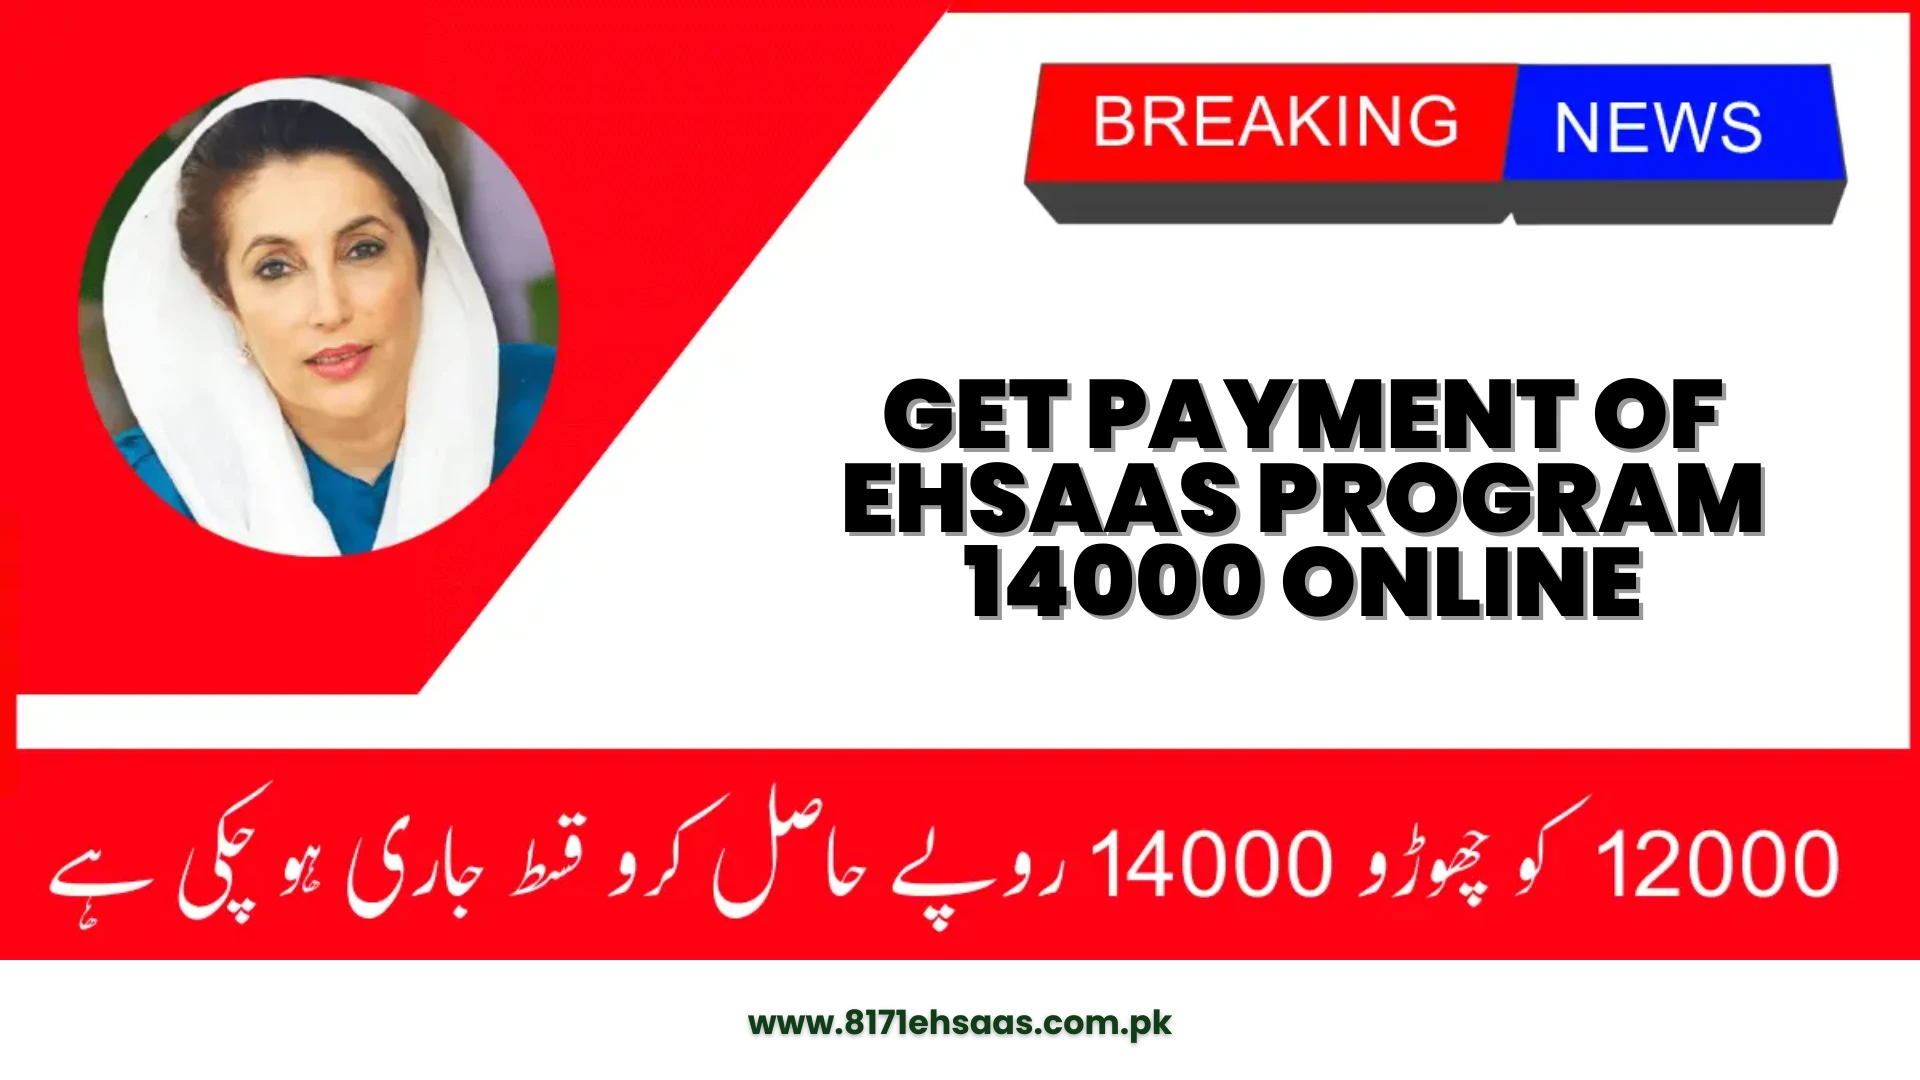 Get payment of Ehsaas Program 14000 online